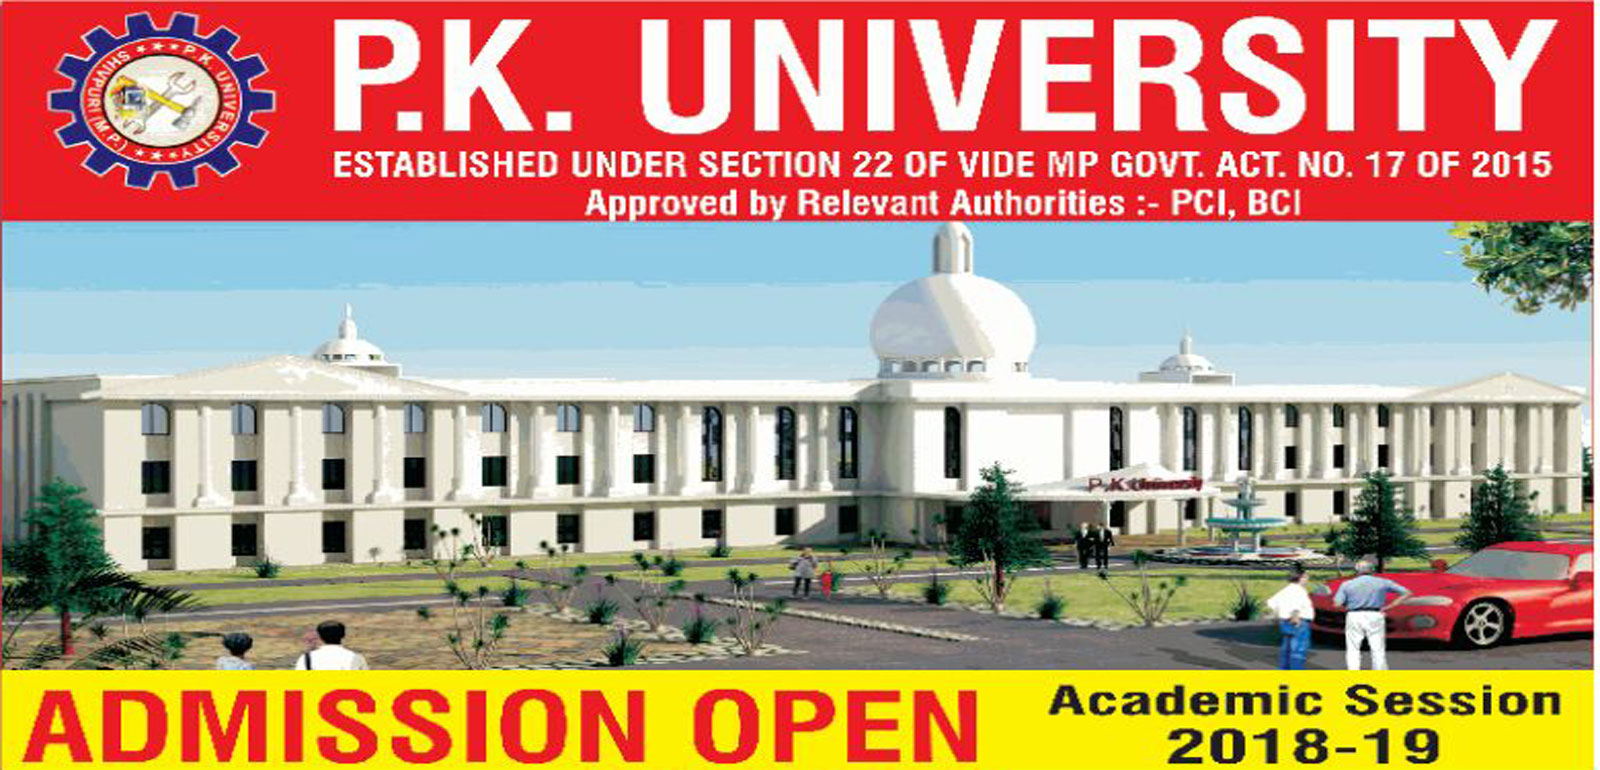 www.pkuniversity.org